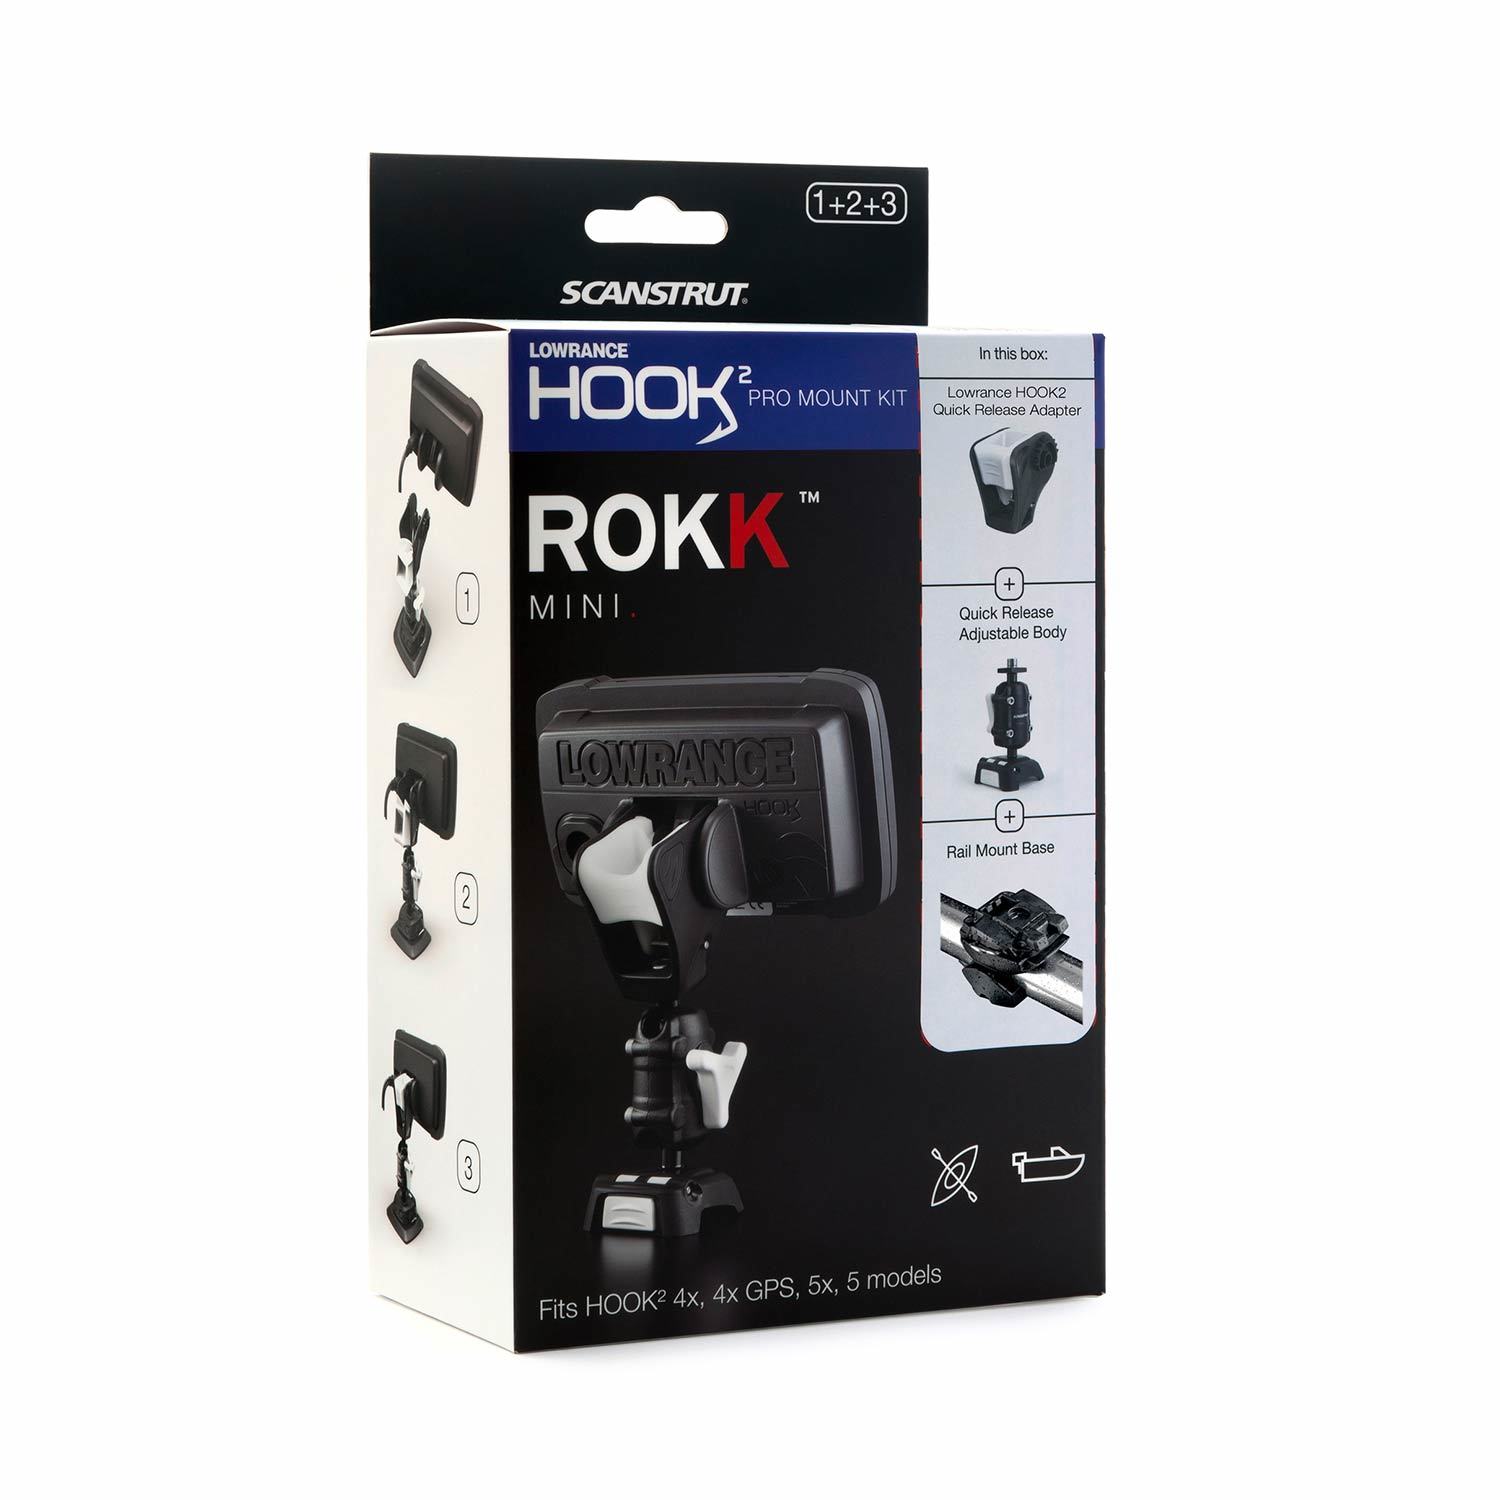 SCANSTRUT ROKK Mini Lowrance HOOK² Pro Mount Kit with Rail Clamp